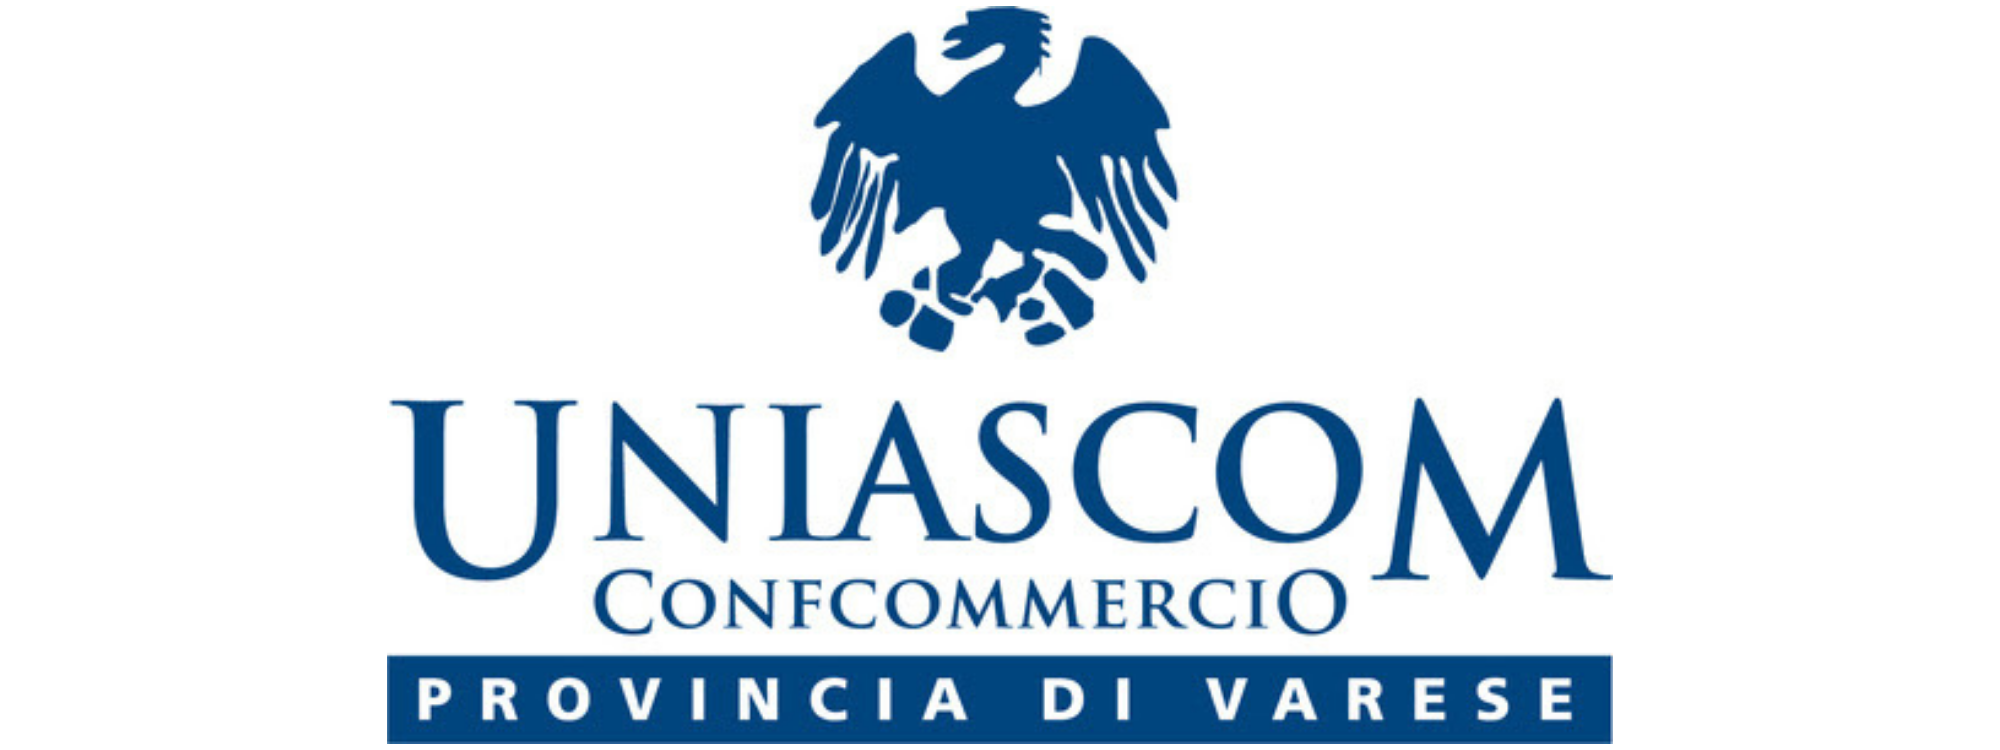 Confcommercio Provincia di Varese